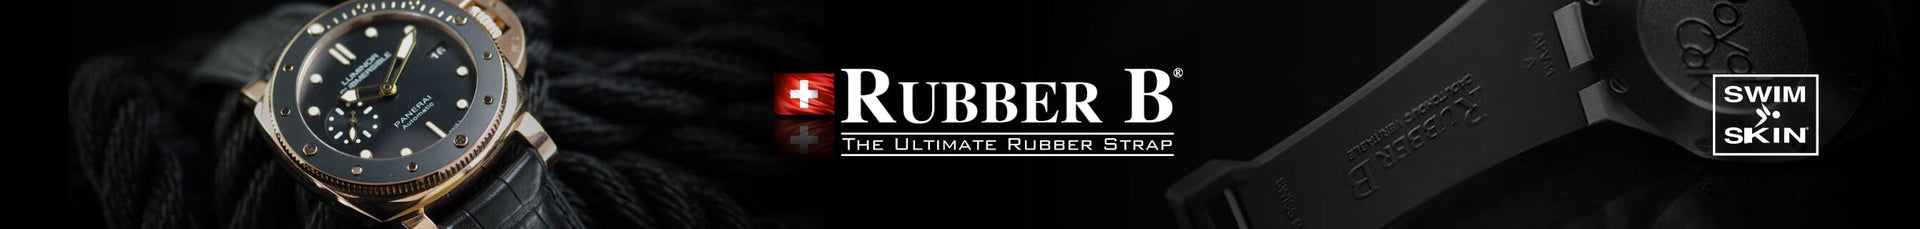 Rubber B